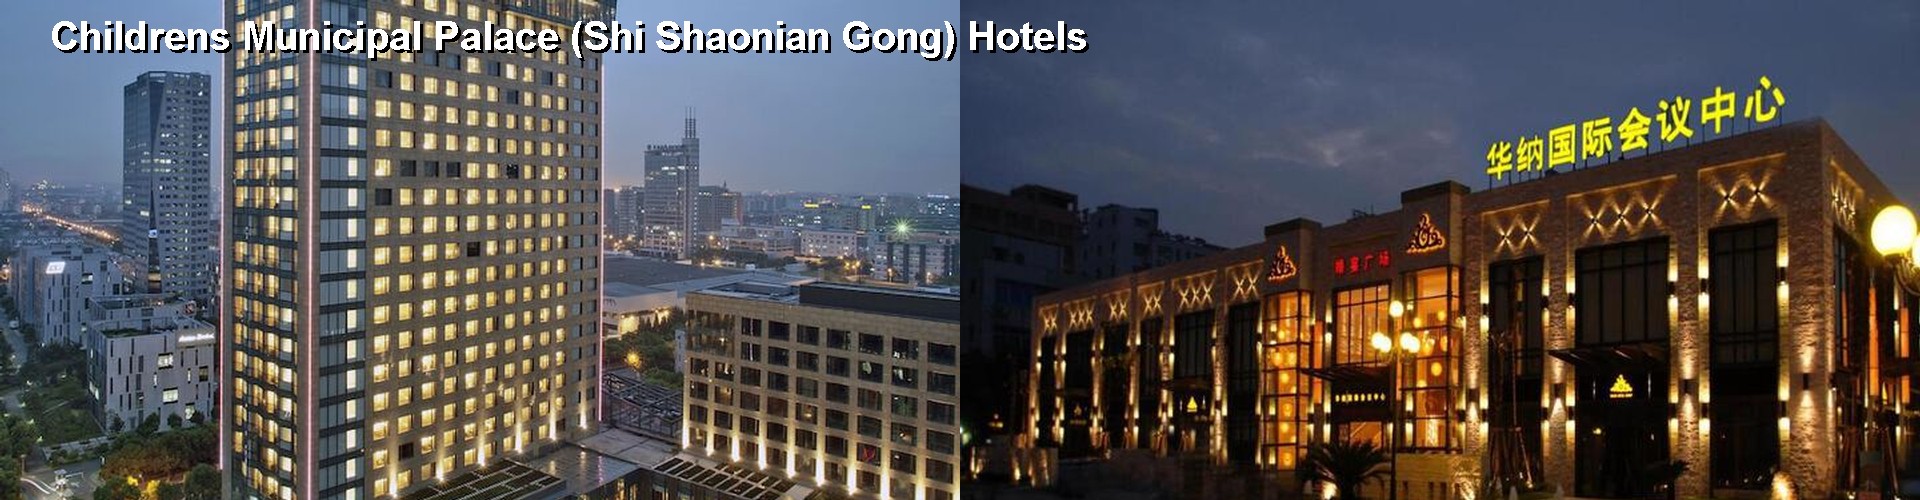 5 Best Hotels near Childrens Municipal Palace (Shi Shaonian Gong)